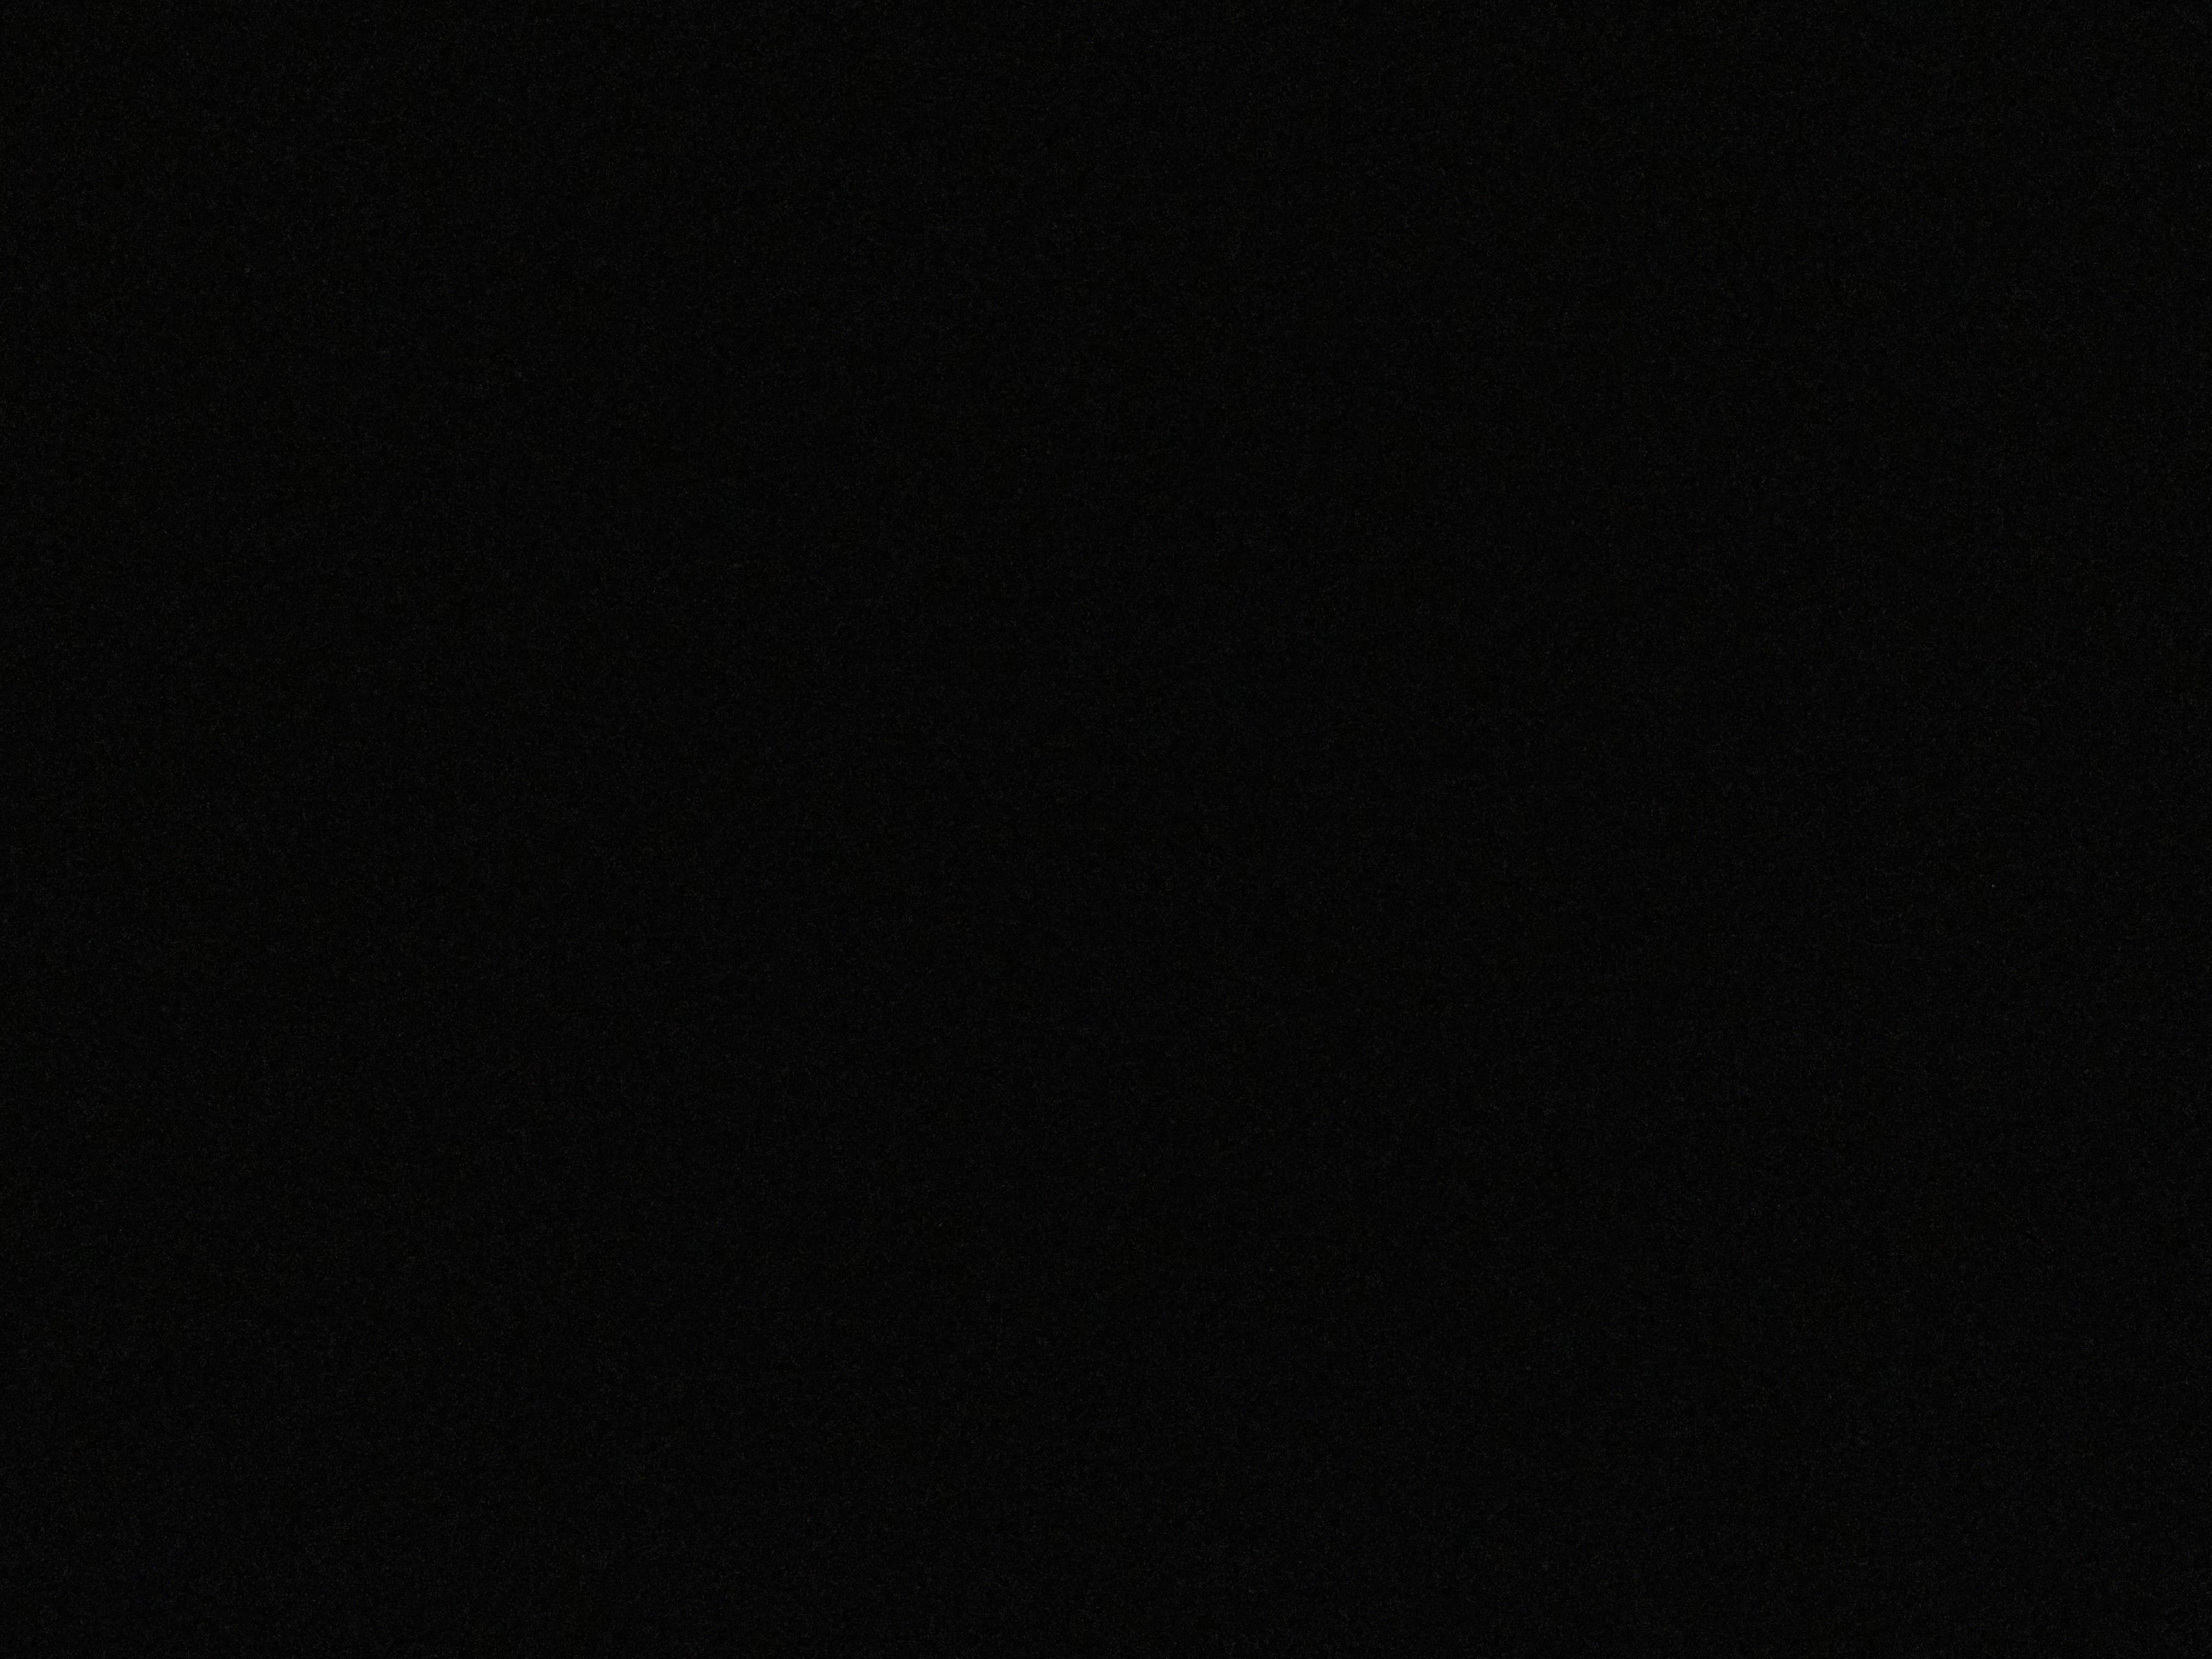 A black image displayed on Liquid Retina XDR